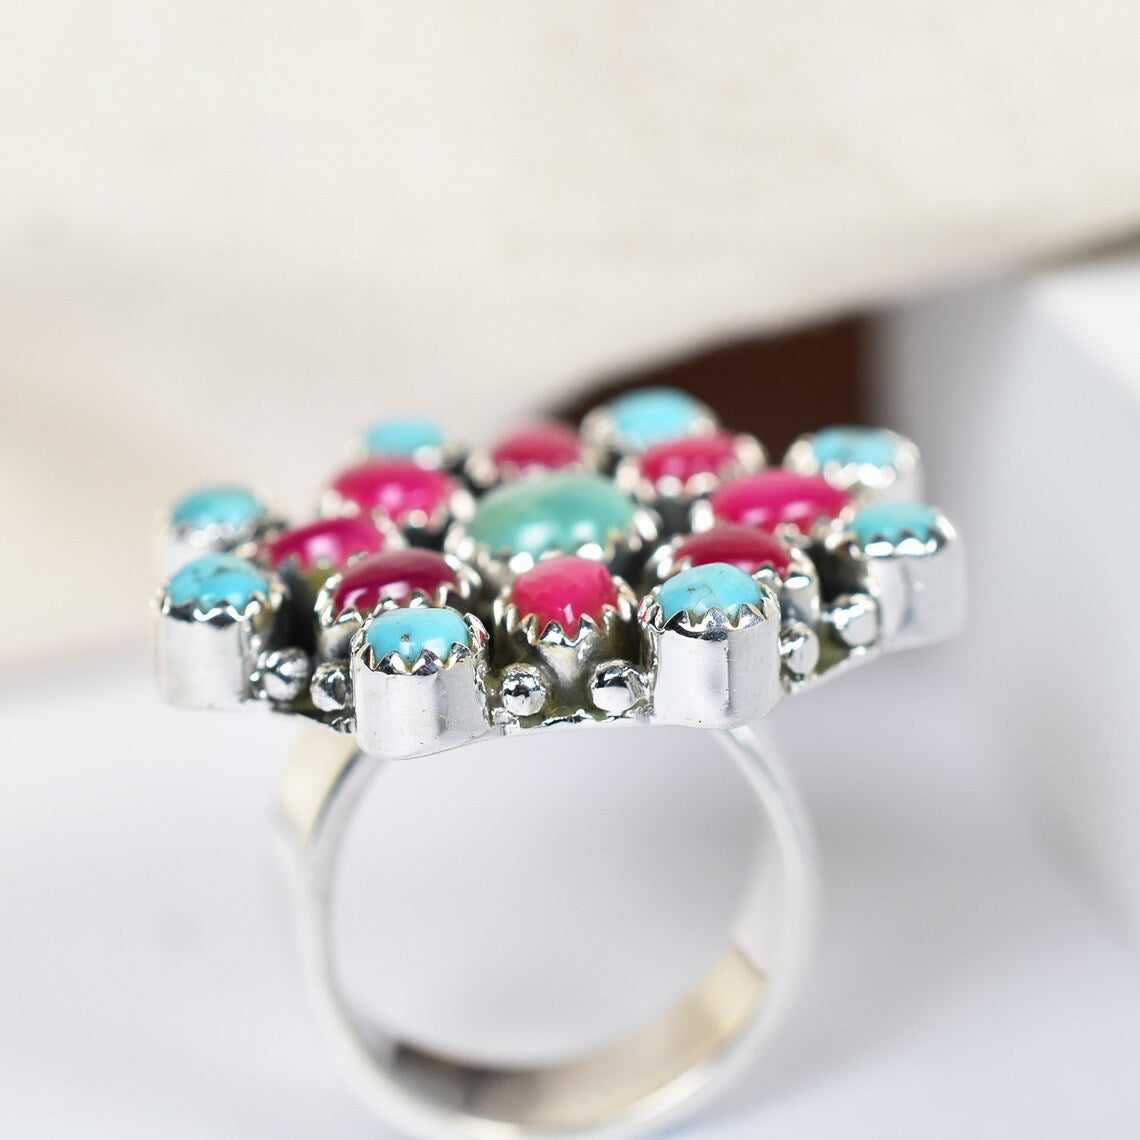 Native American Turquoise & Pink Onyx Cluster Rings - 925 Sterling Silver Handmade Vintage Rings